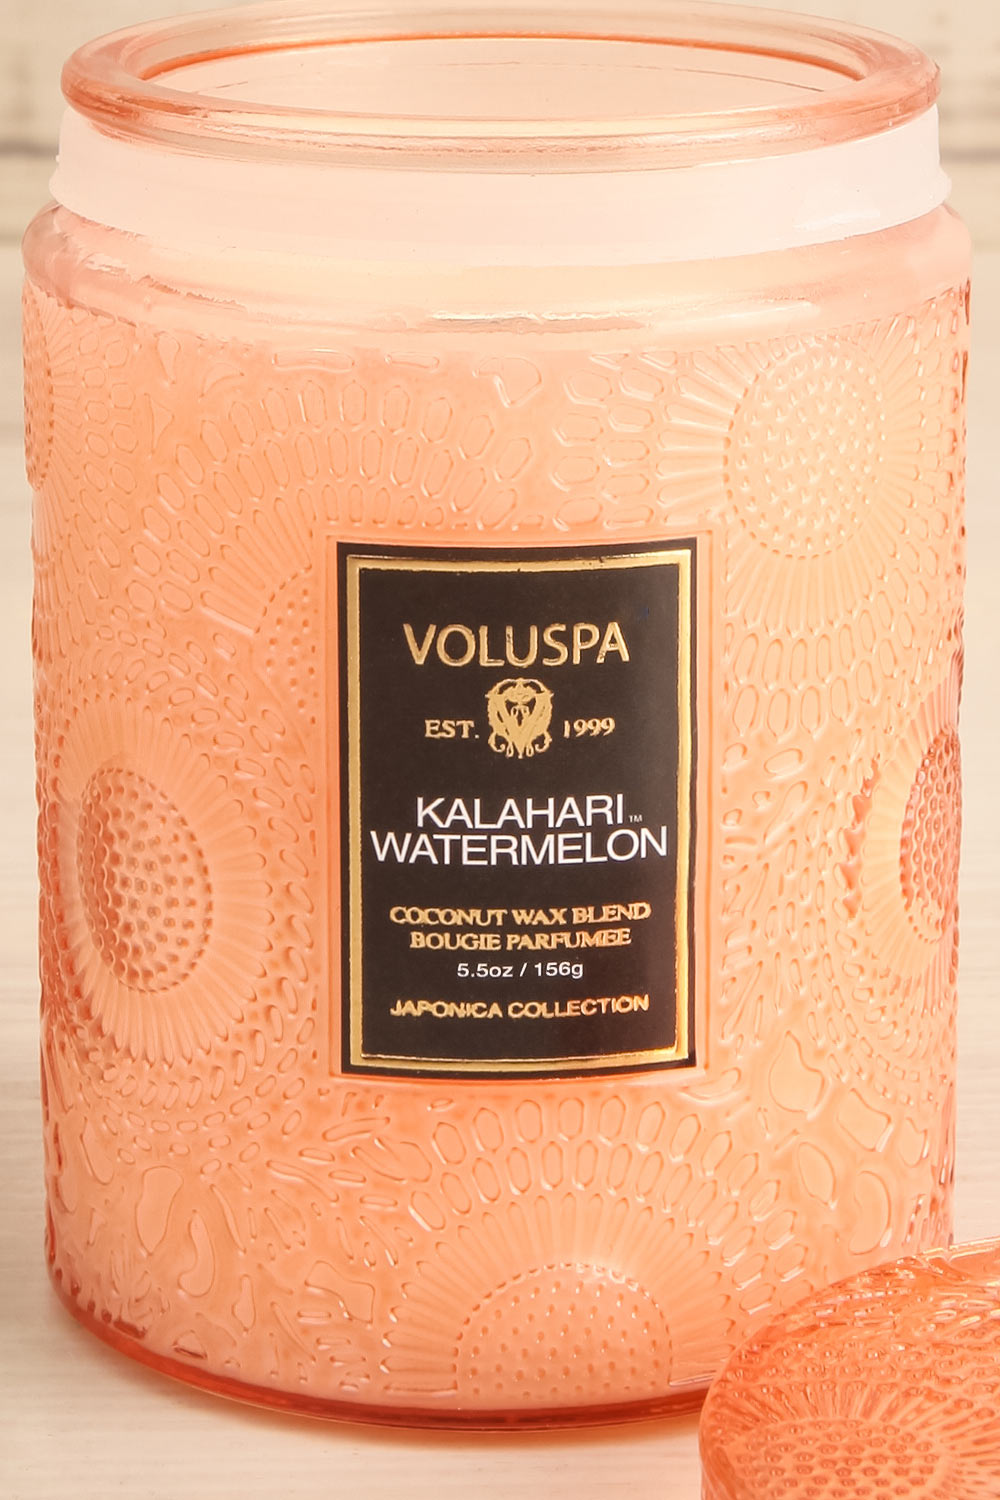 Kalahari Watermelon Small Jar Candle by Voluspa | Maison garçonne open close-up